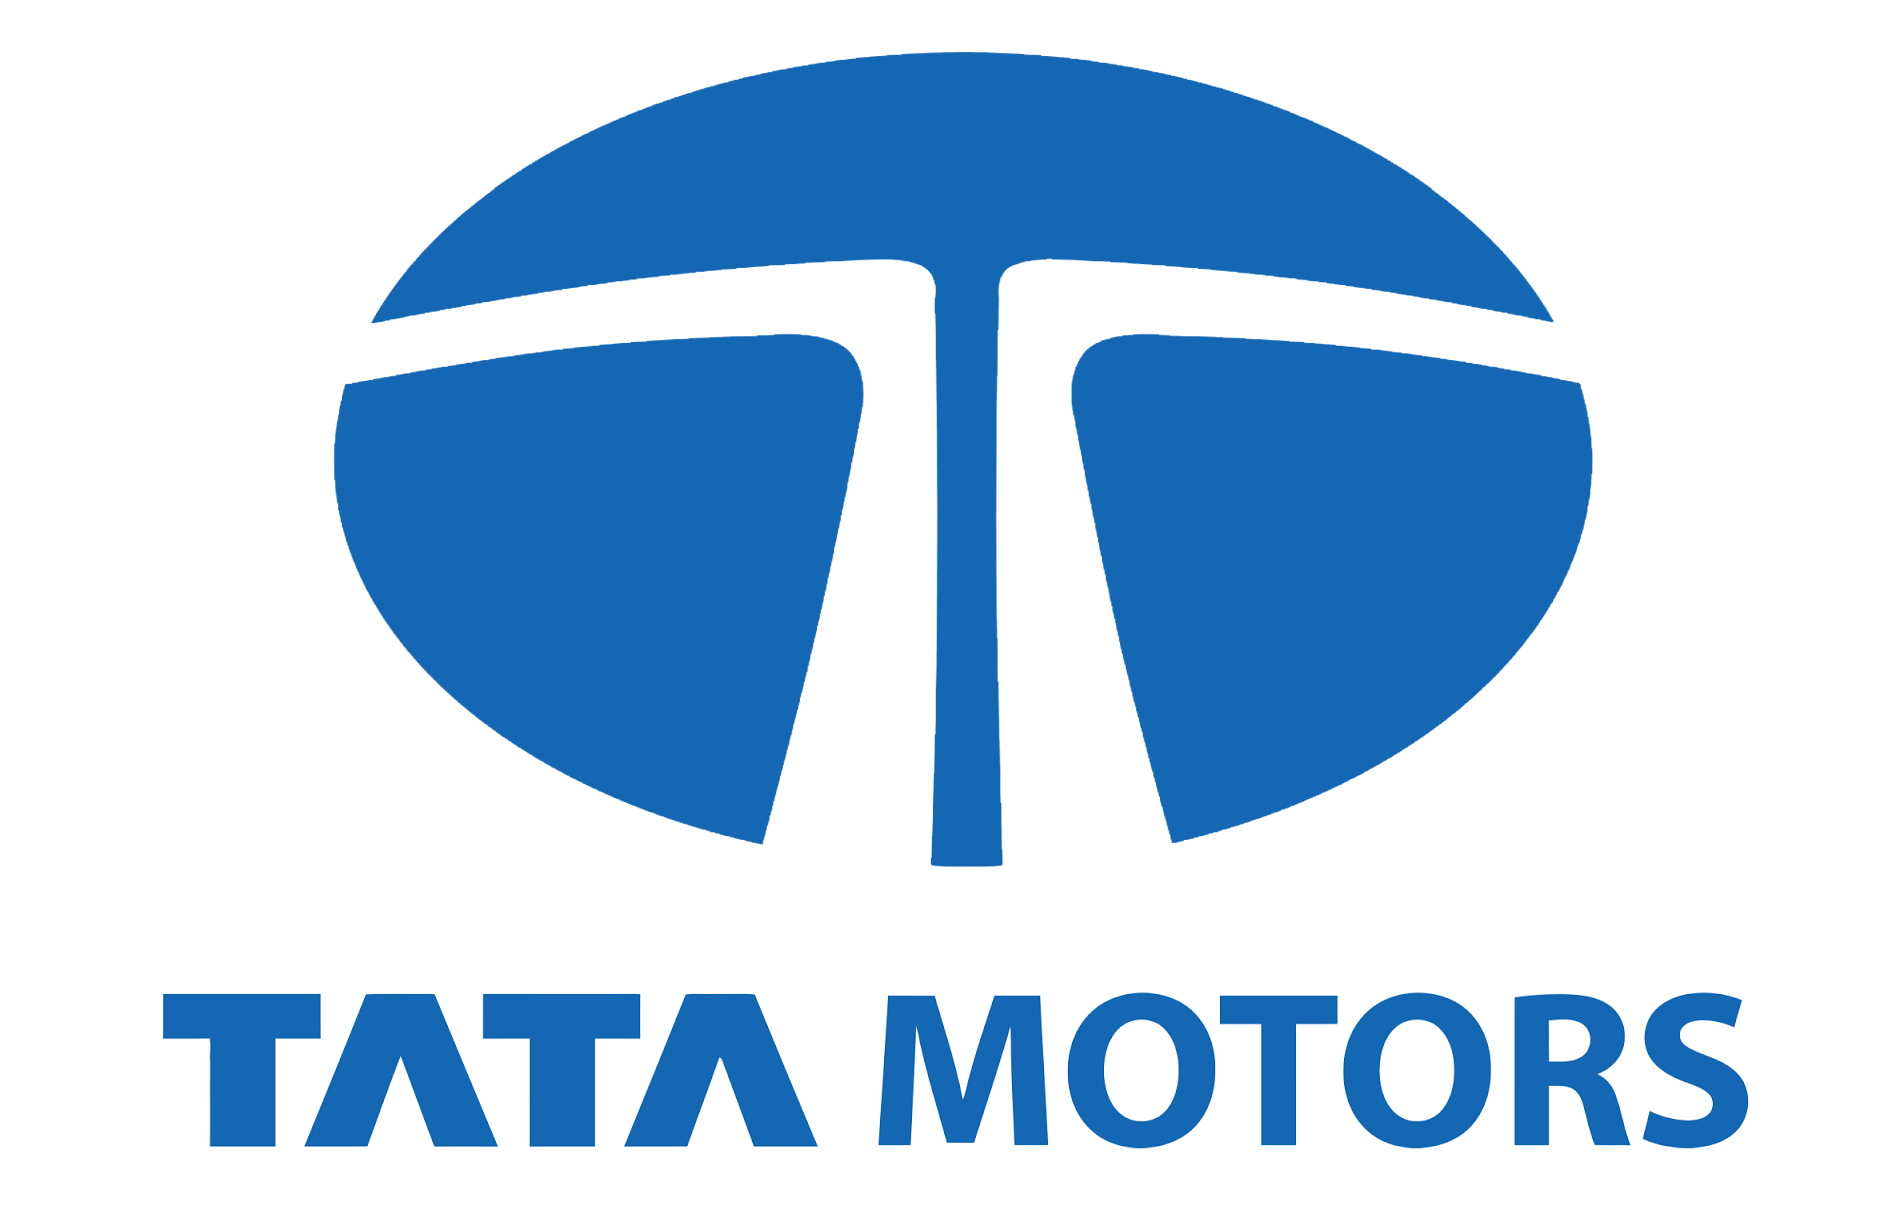 Tata Motors Cars Showroom - Key Motors|Repair Services|Automotive